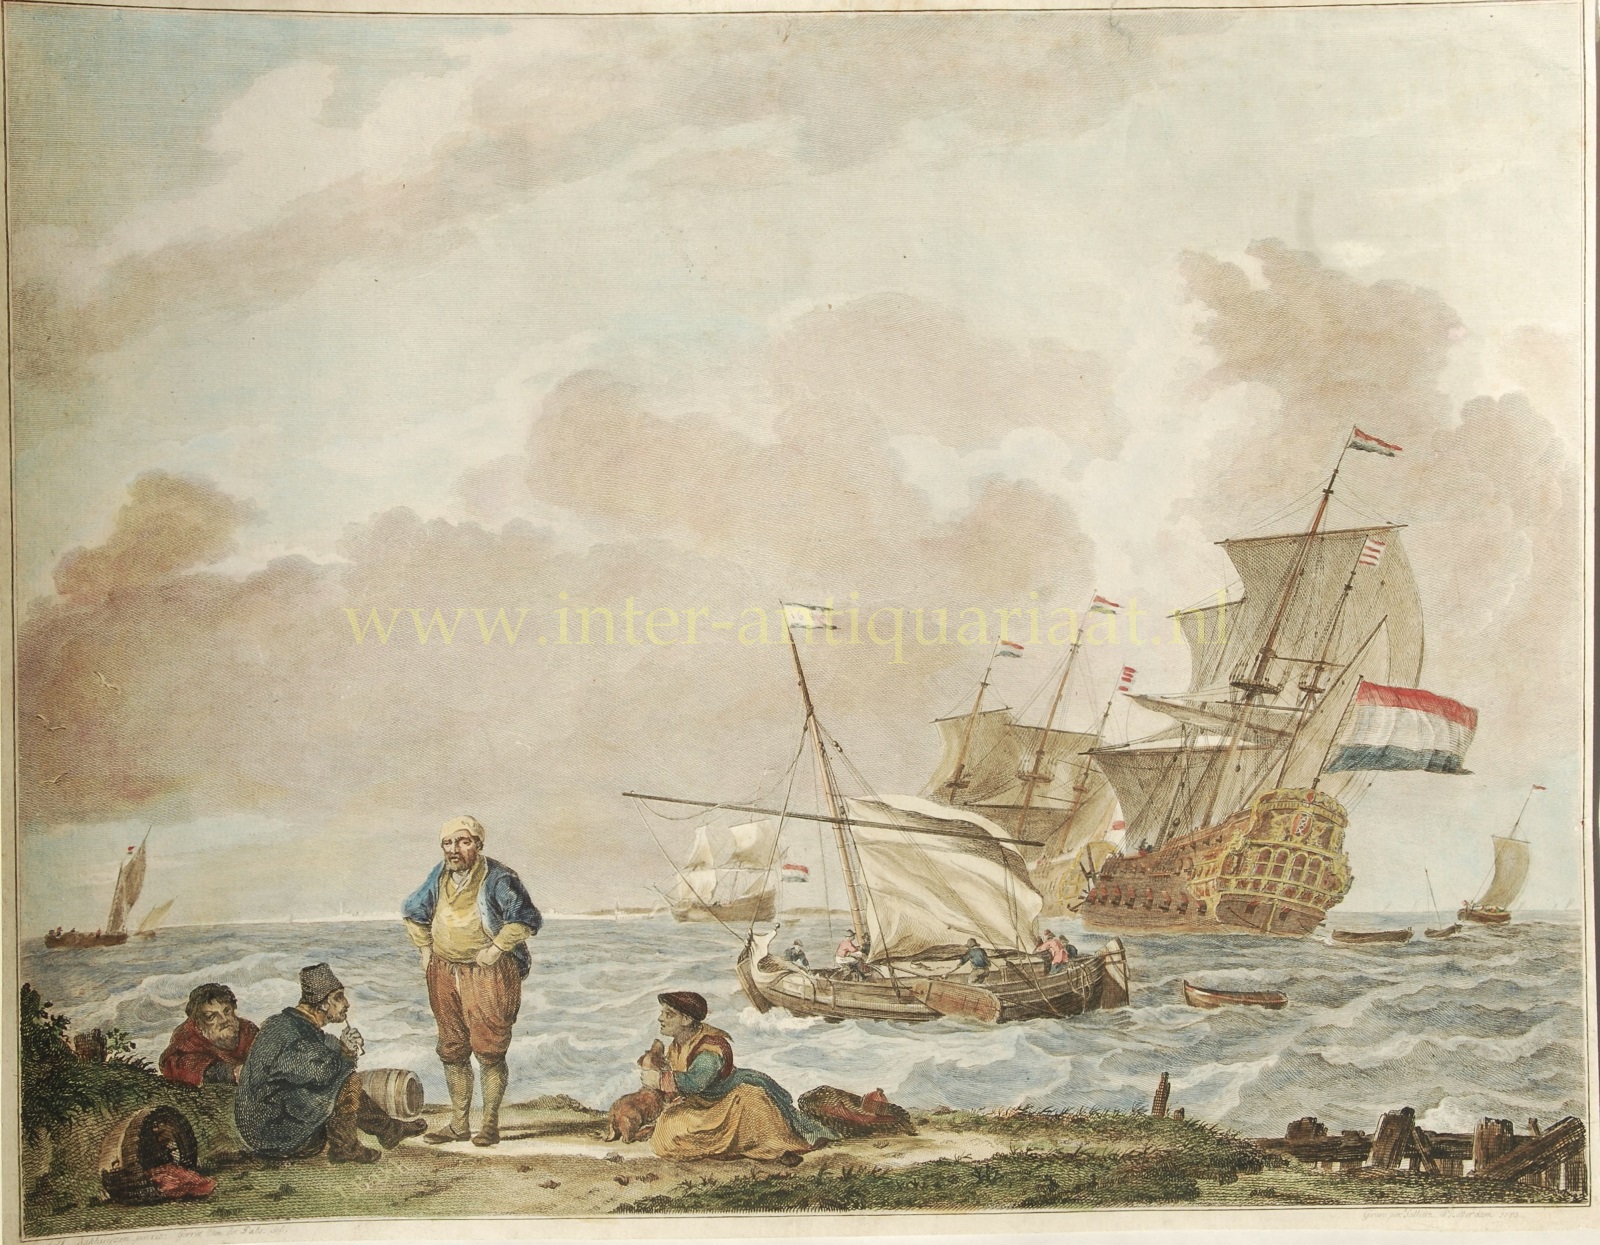 Backhuysen-- Ludolf (1631-1708) - Maritime scene - Matthias de Sallieth after Ludolf Backhuysen, 1783